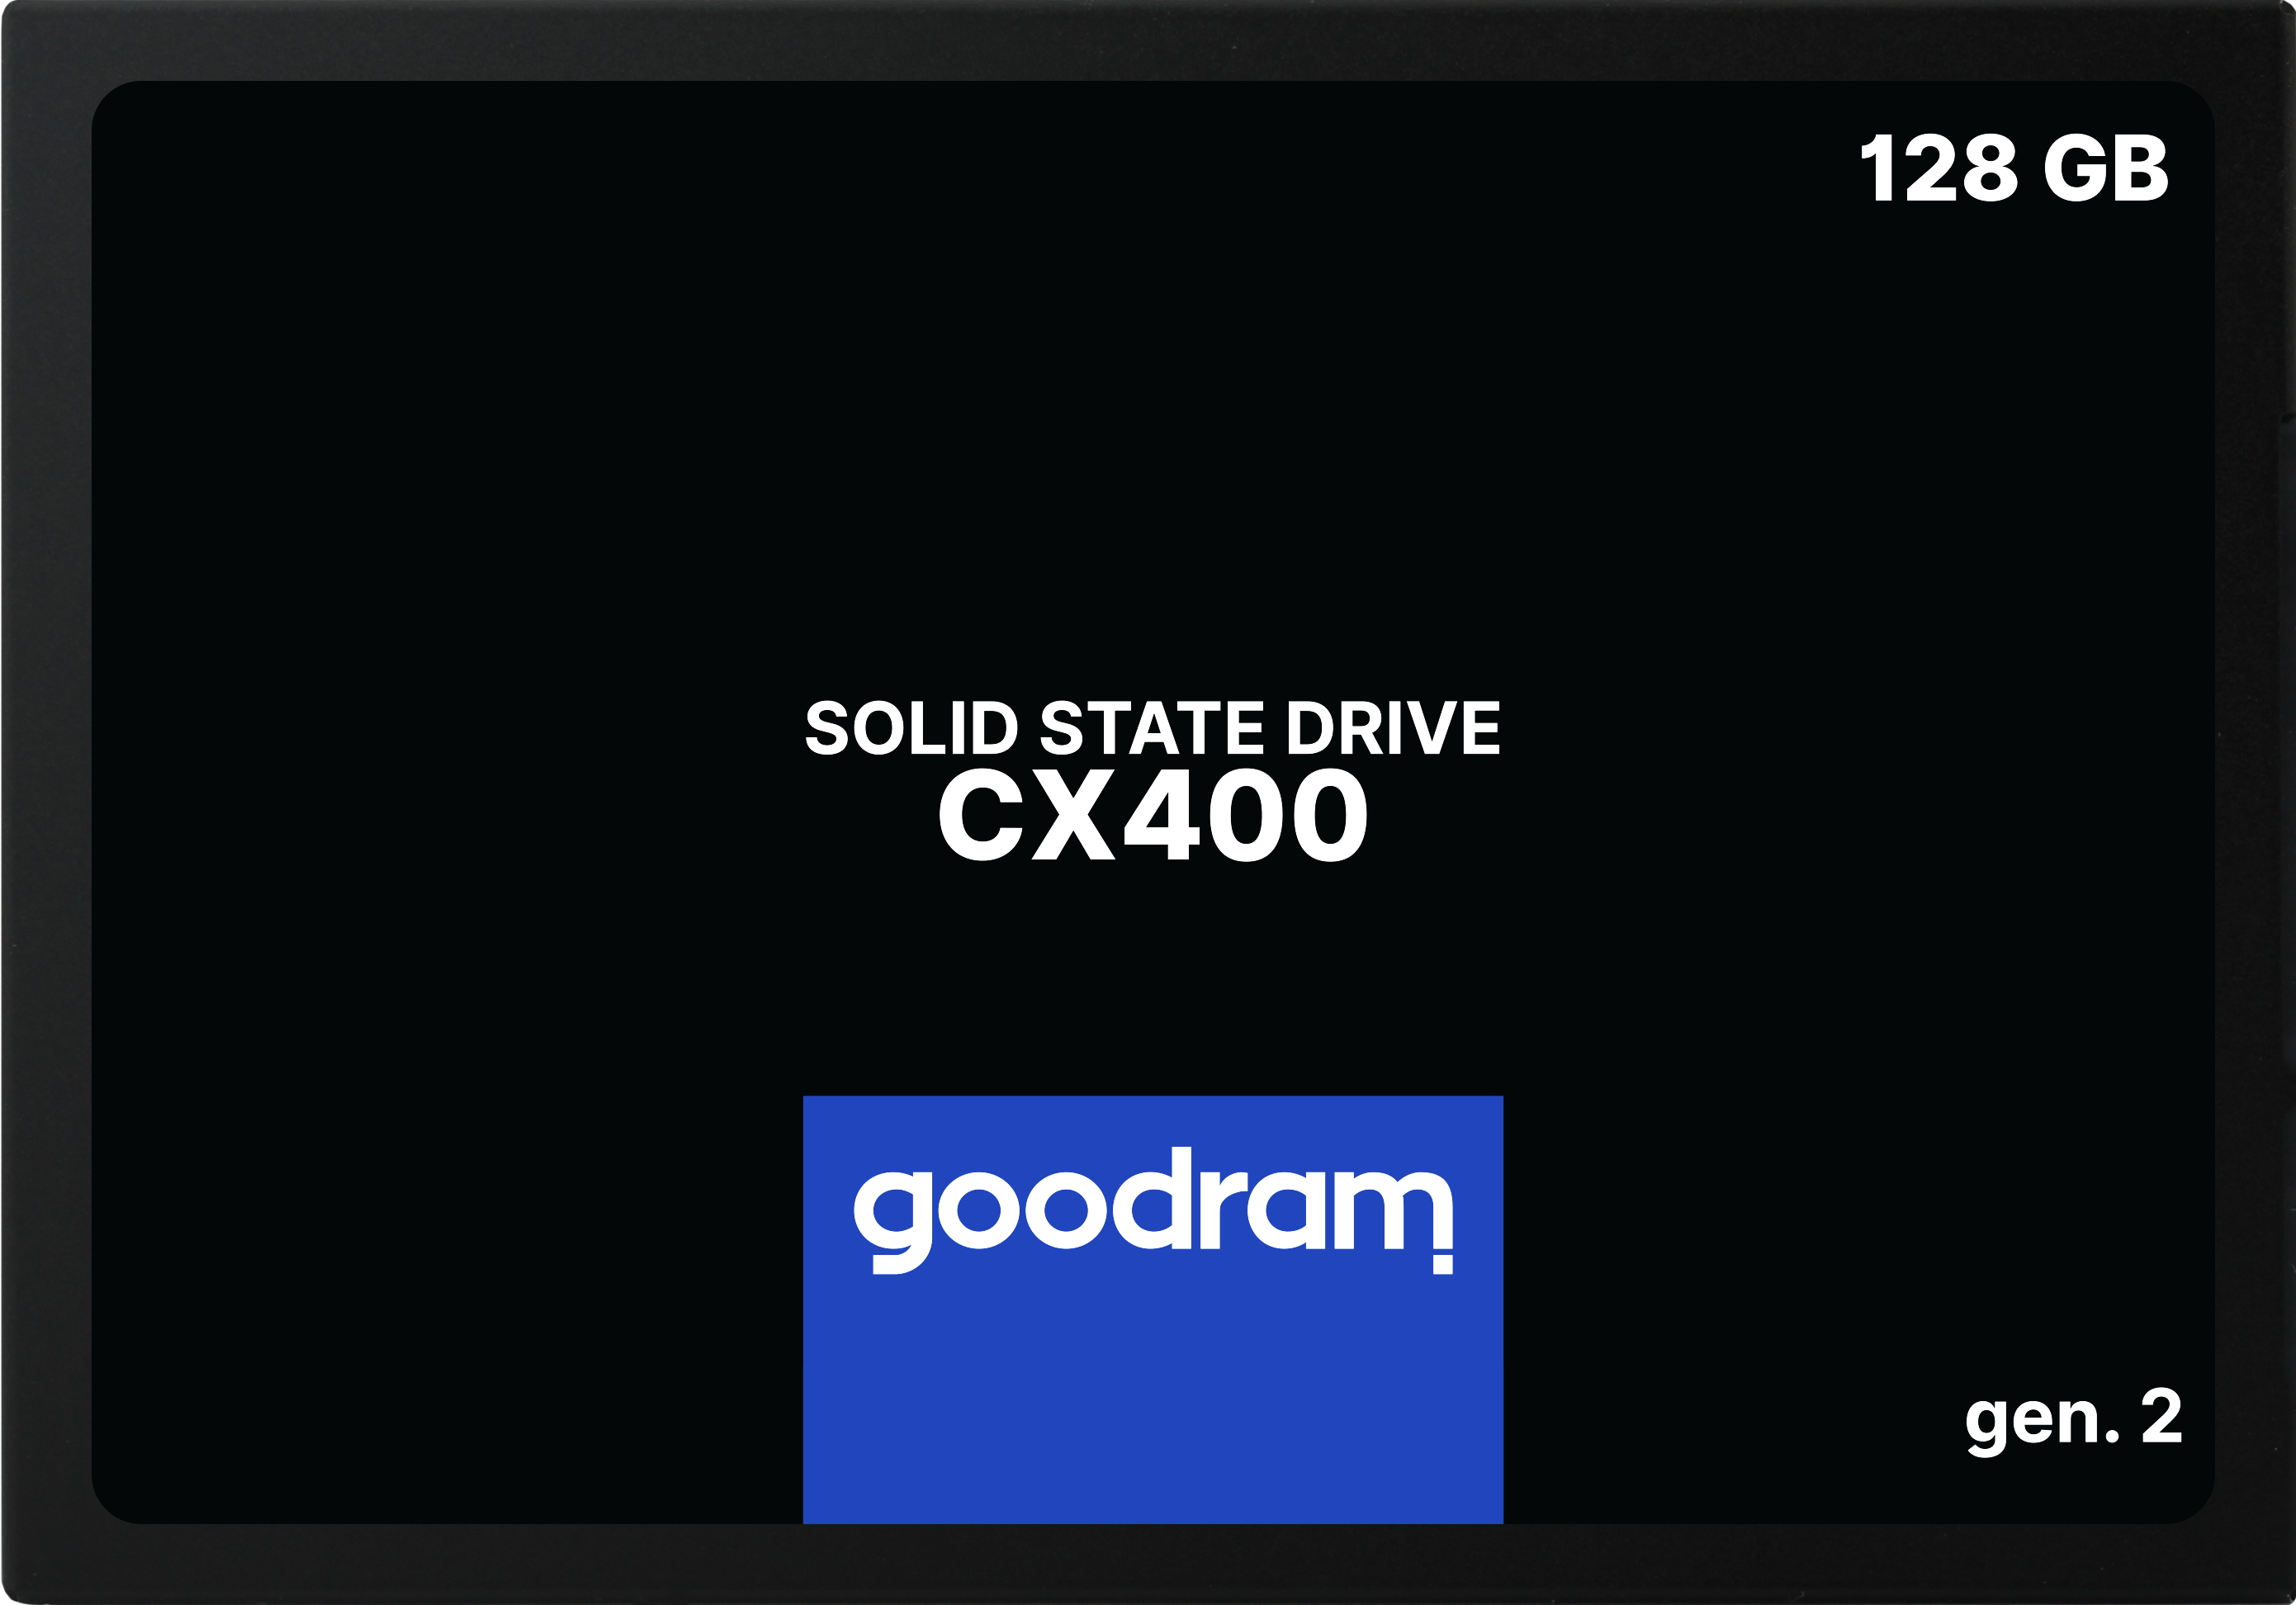 Goodram 128gb Cx400 Serie Ssd 2,5" Sata-600 3d Nand 7mm 3-year Warranty + Technical Support Ssdpr-cx400-128-g2 - xep01